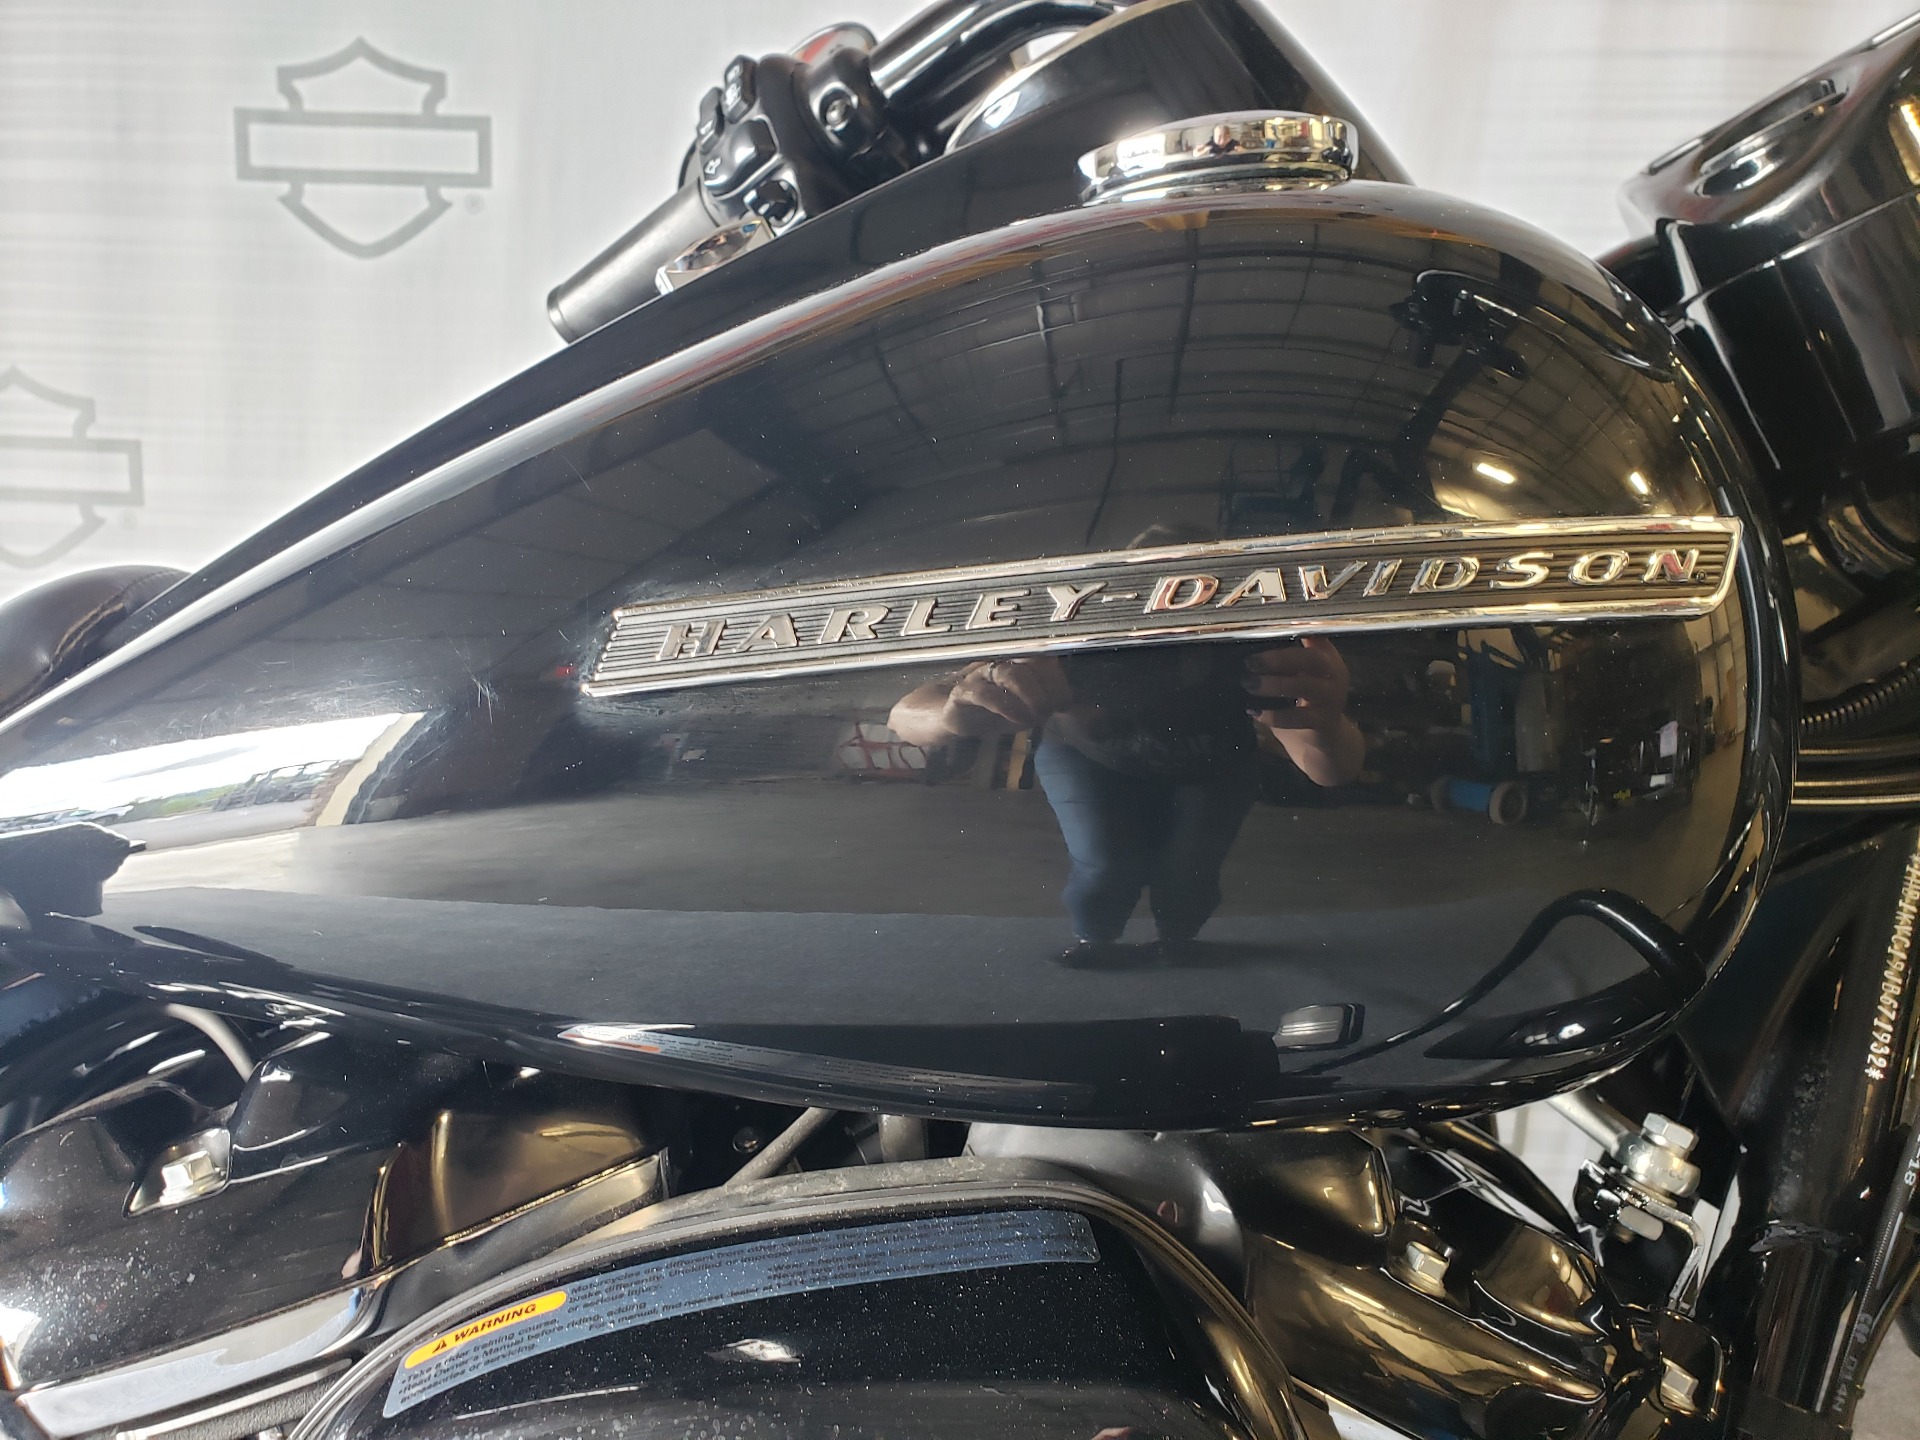 2018 Harley-Davidson Road King® Special in Morgantown, West Virginia - Photo 2